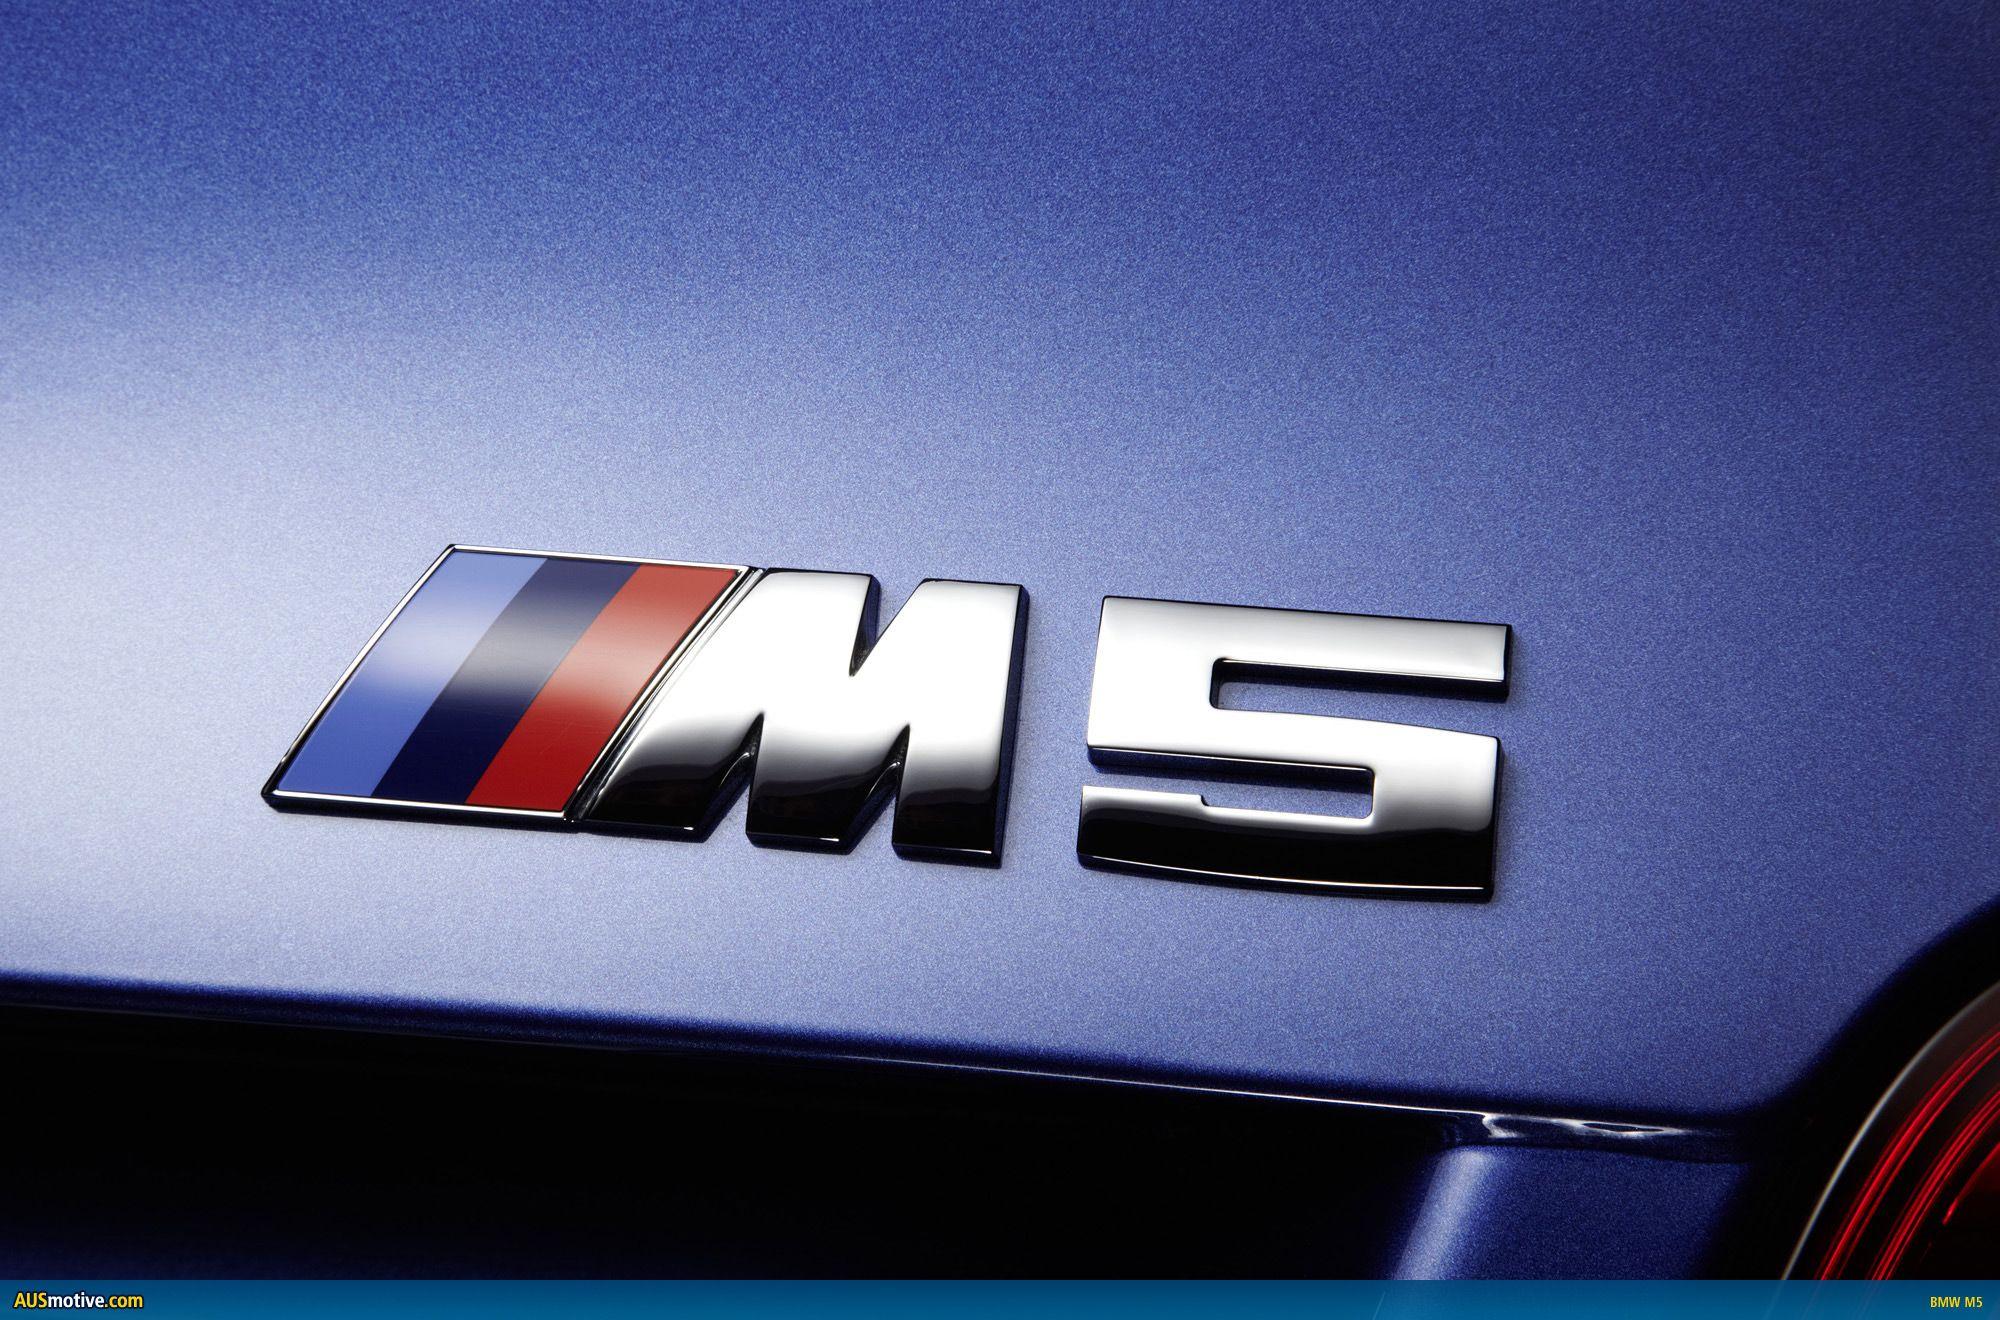 AUSmotive.com OFFICIAL: BMW M5 photo & specifications